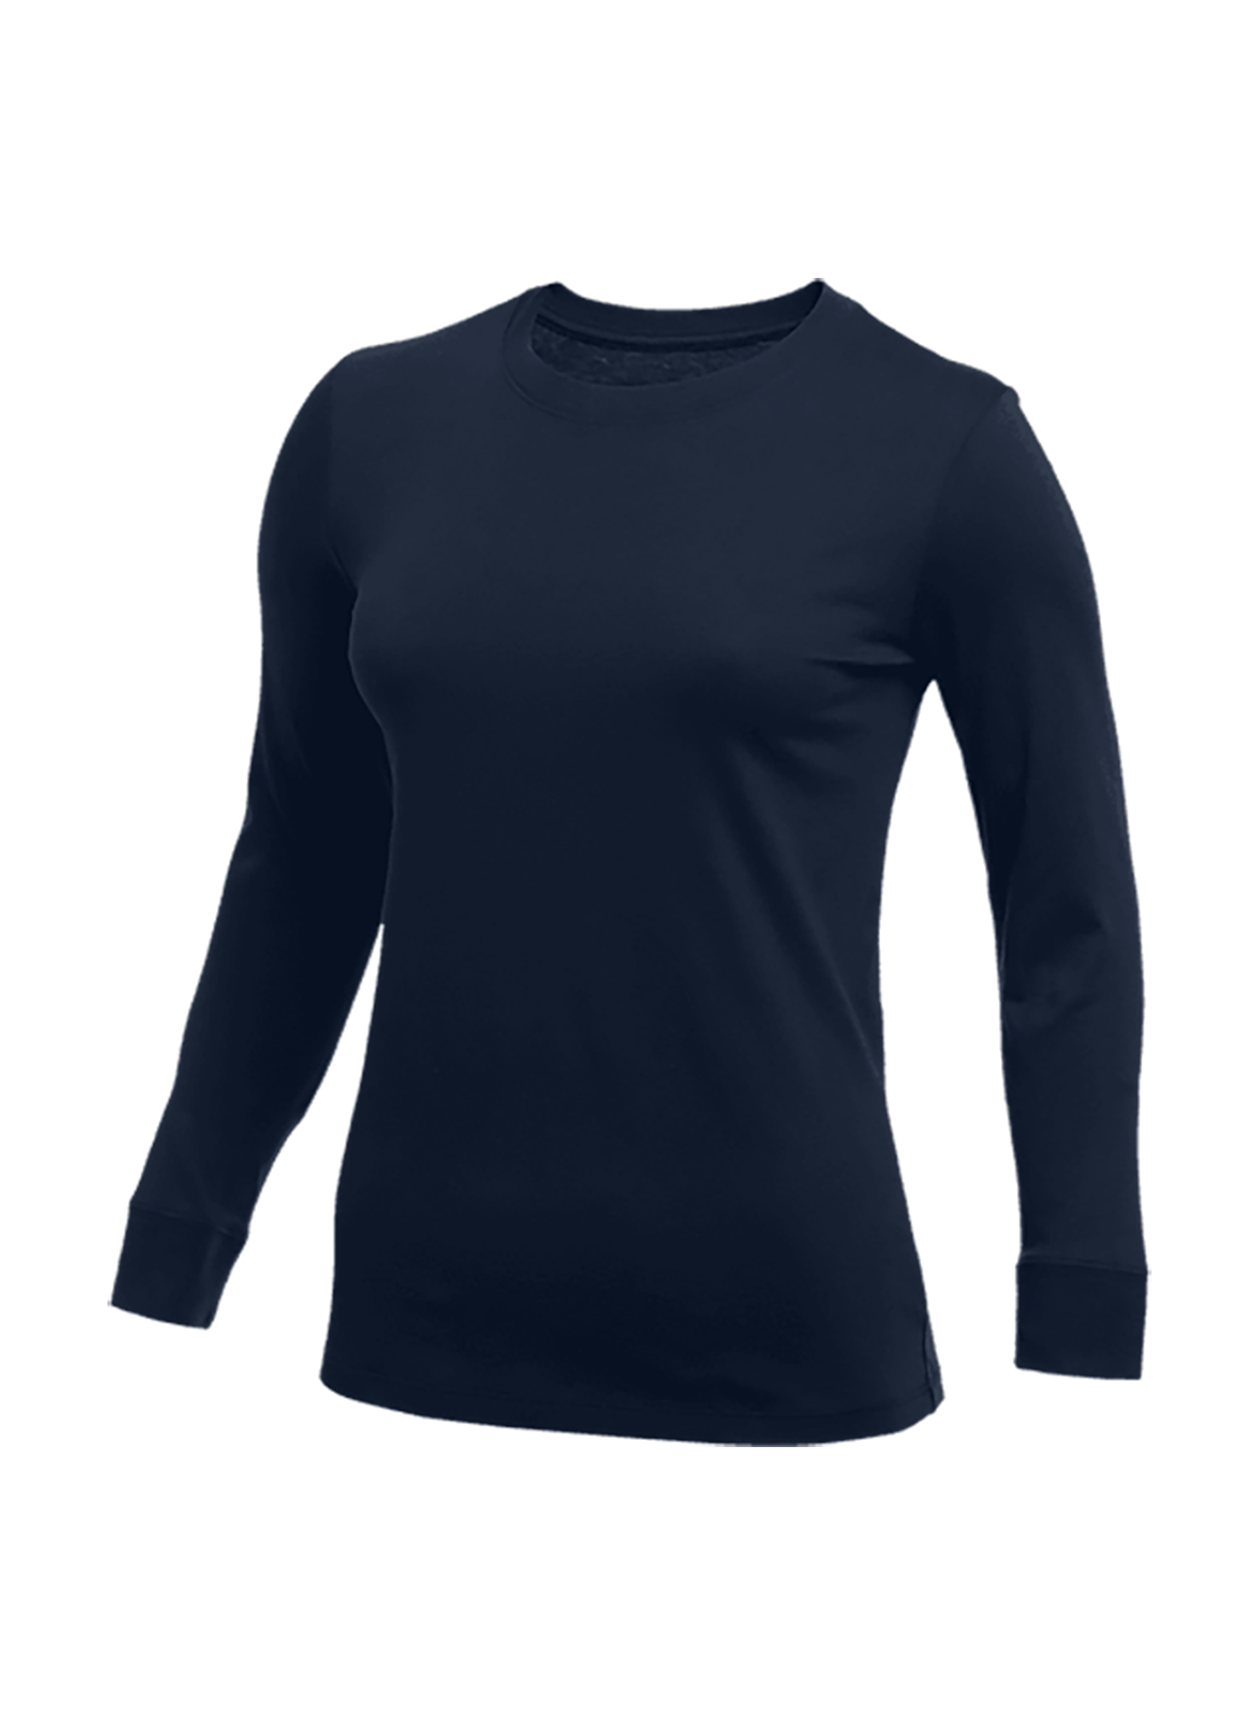 Nike Women's College Navy Long-Sleeve T-Shirt